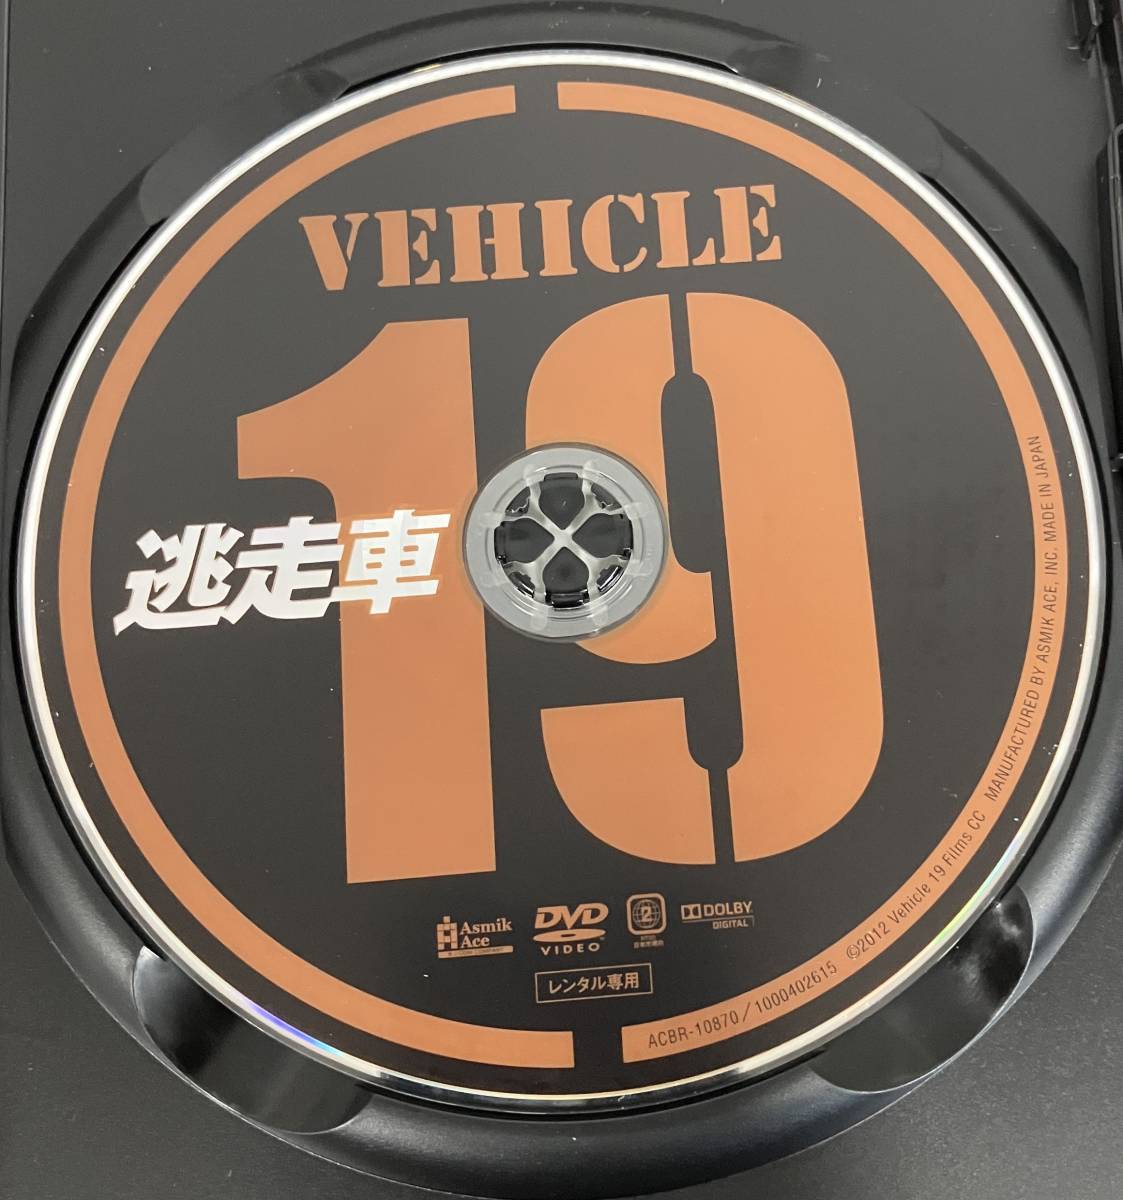 i2-2-1. mileage car ( Western films )ACBR-10870 rental up used DVD